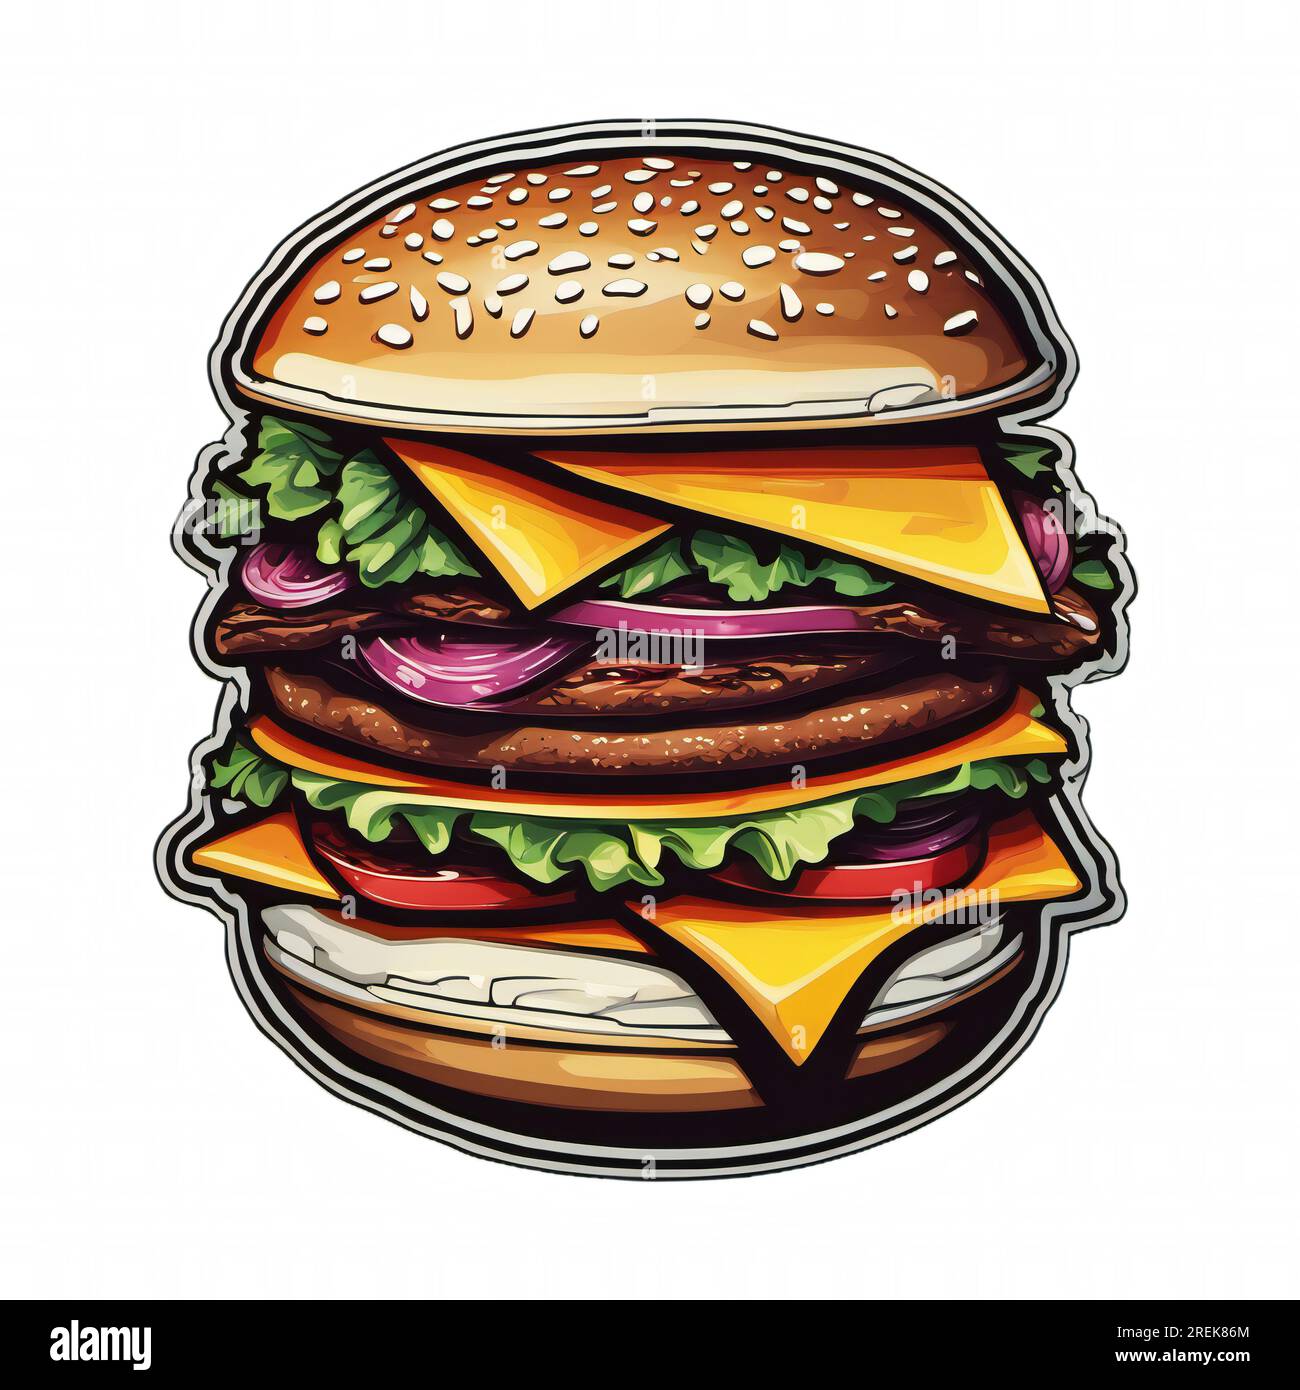 https://c8.alamy.com/comp/2REK86M/digital-illustration-of-a-cheeseburger-can-be-used-as-a-sticker-white-background-2REK86M.jpg